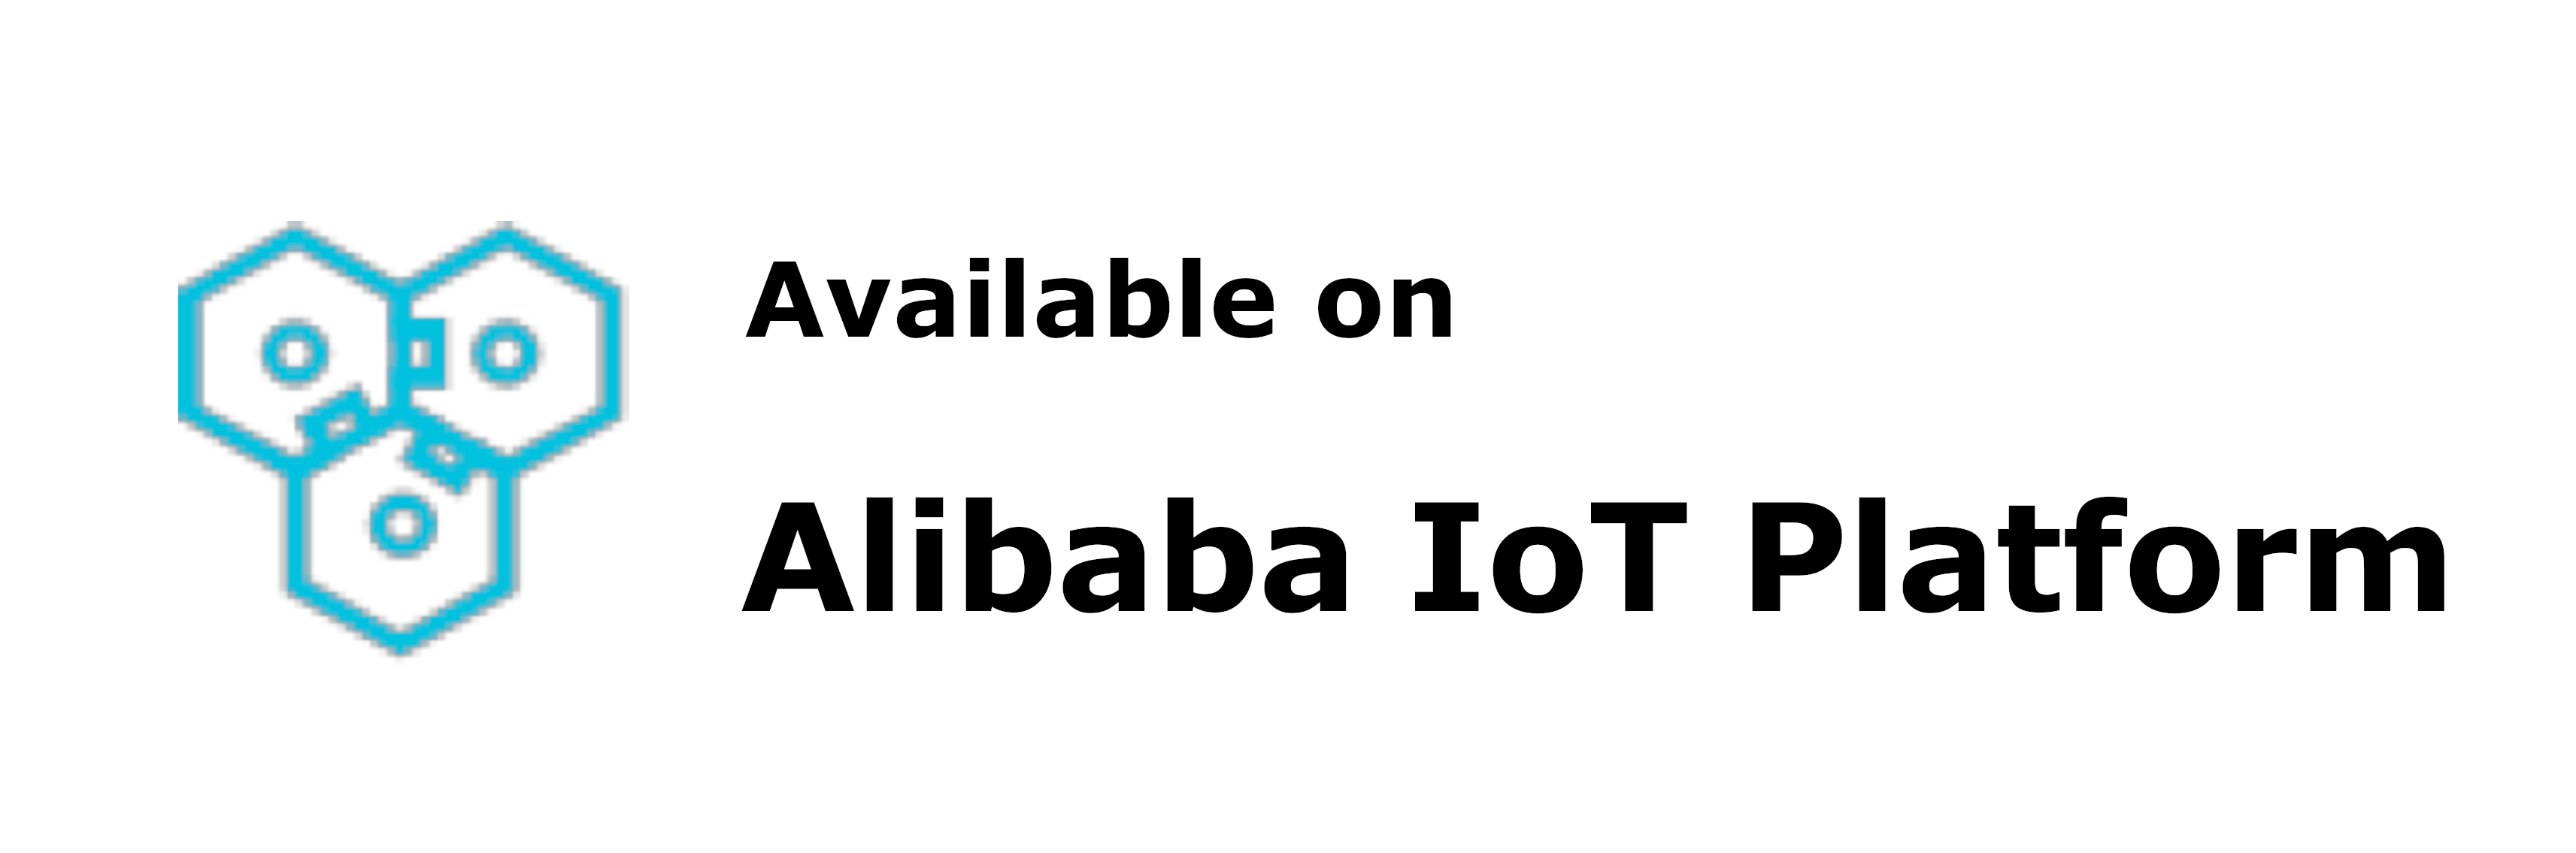 available on Alibaba IoT Platform